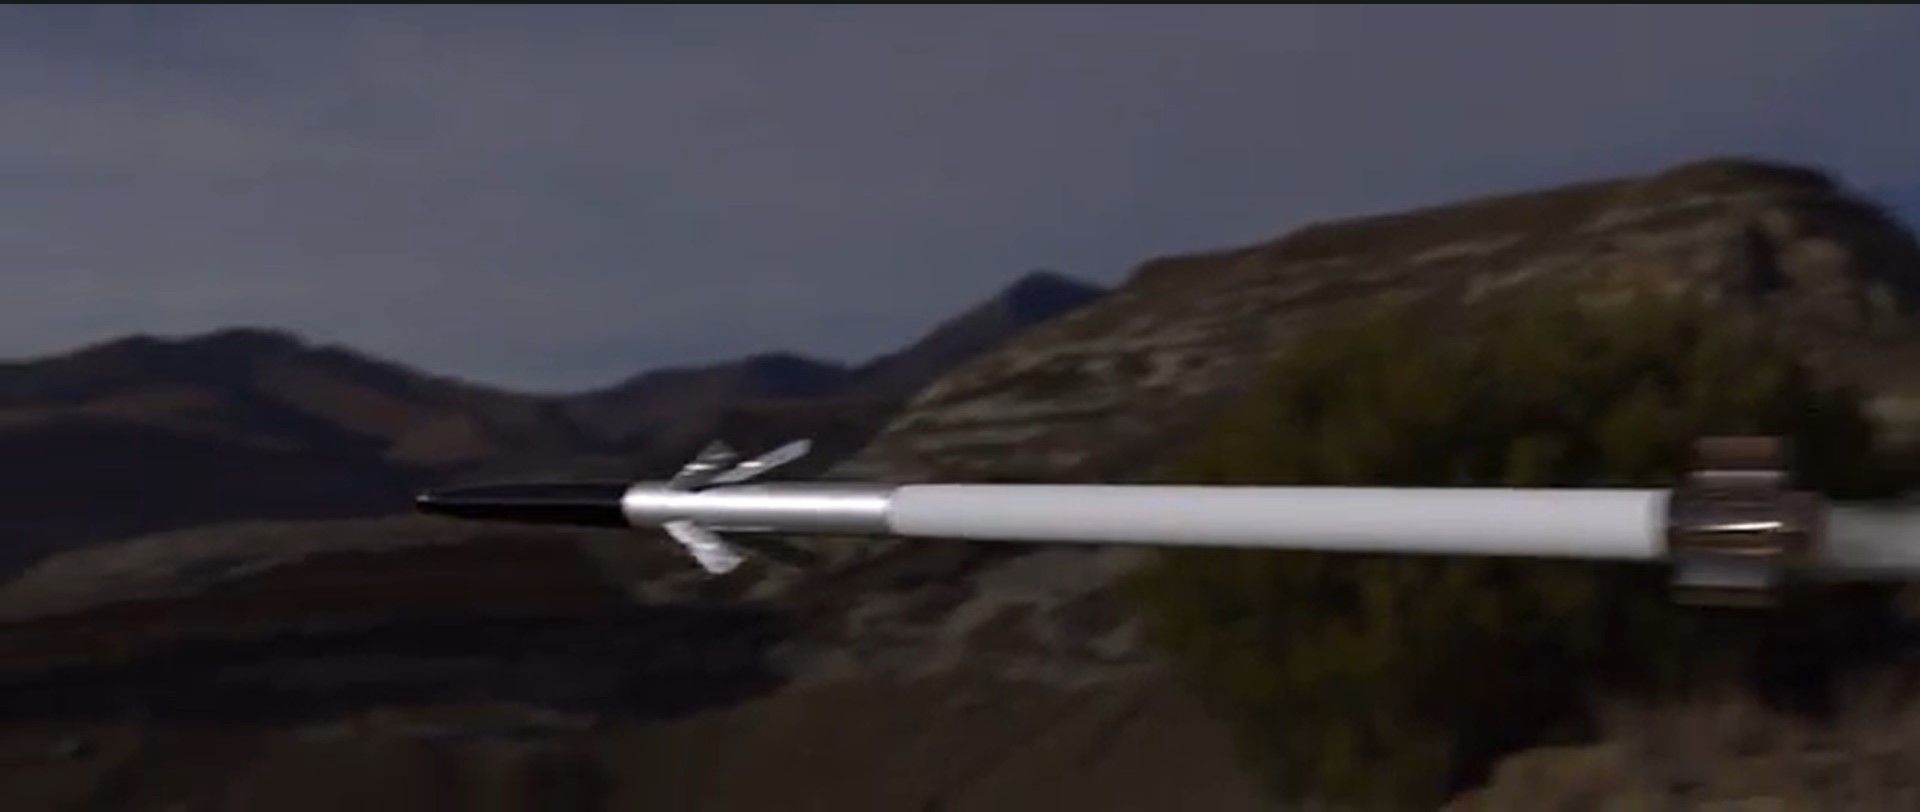 Hydra Rockets with APKWS Kits Intercept Fast-Moving Drones